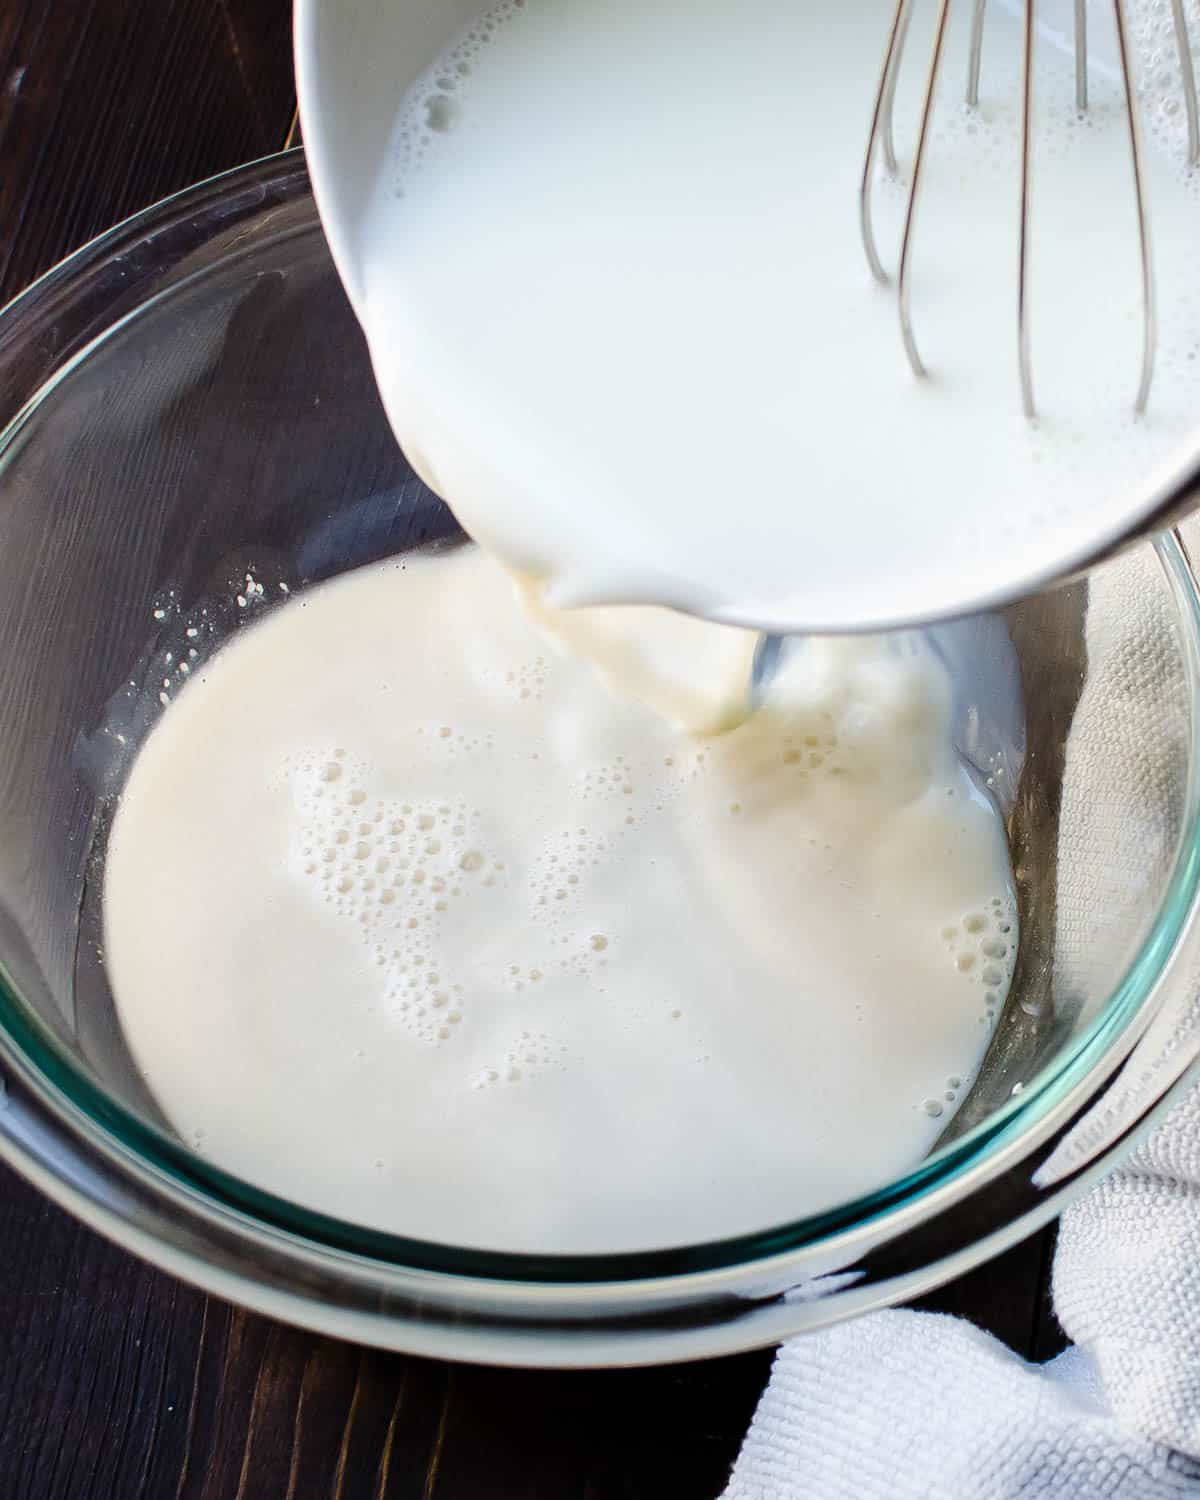 Adding milk to the yeast.